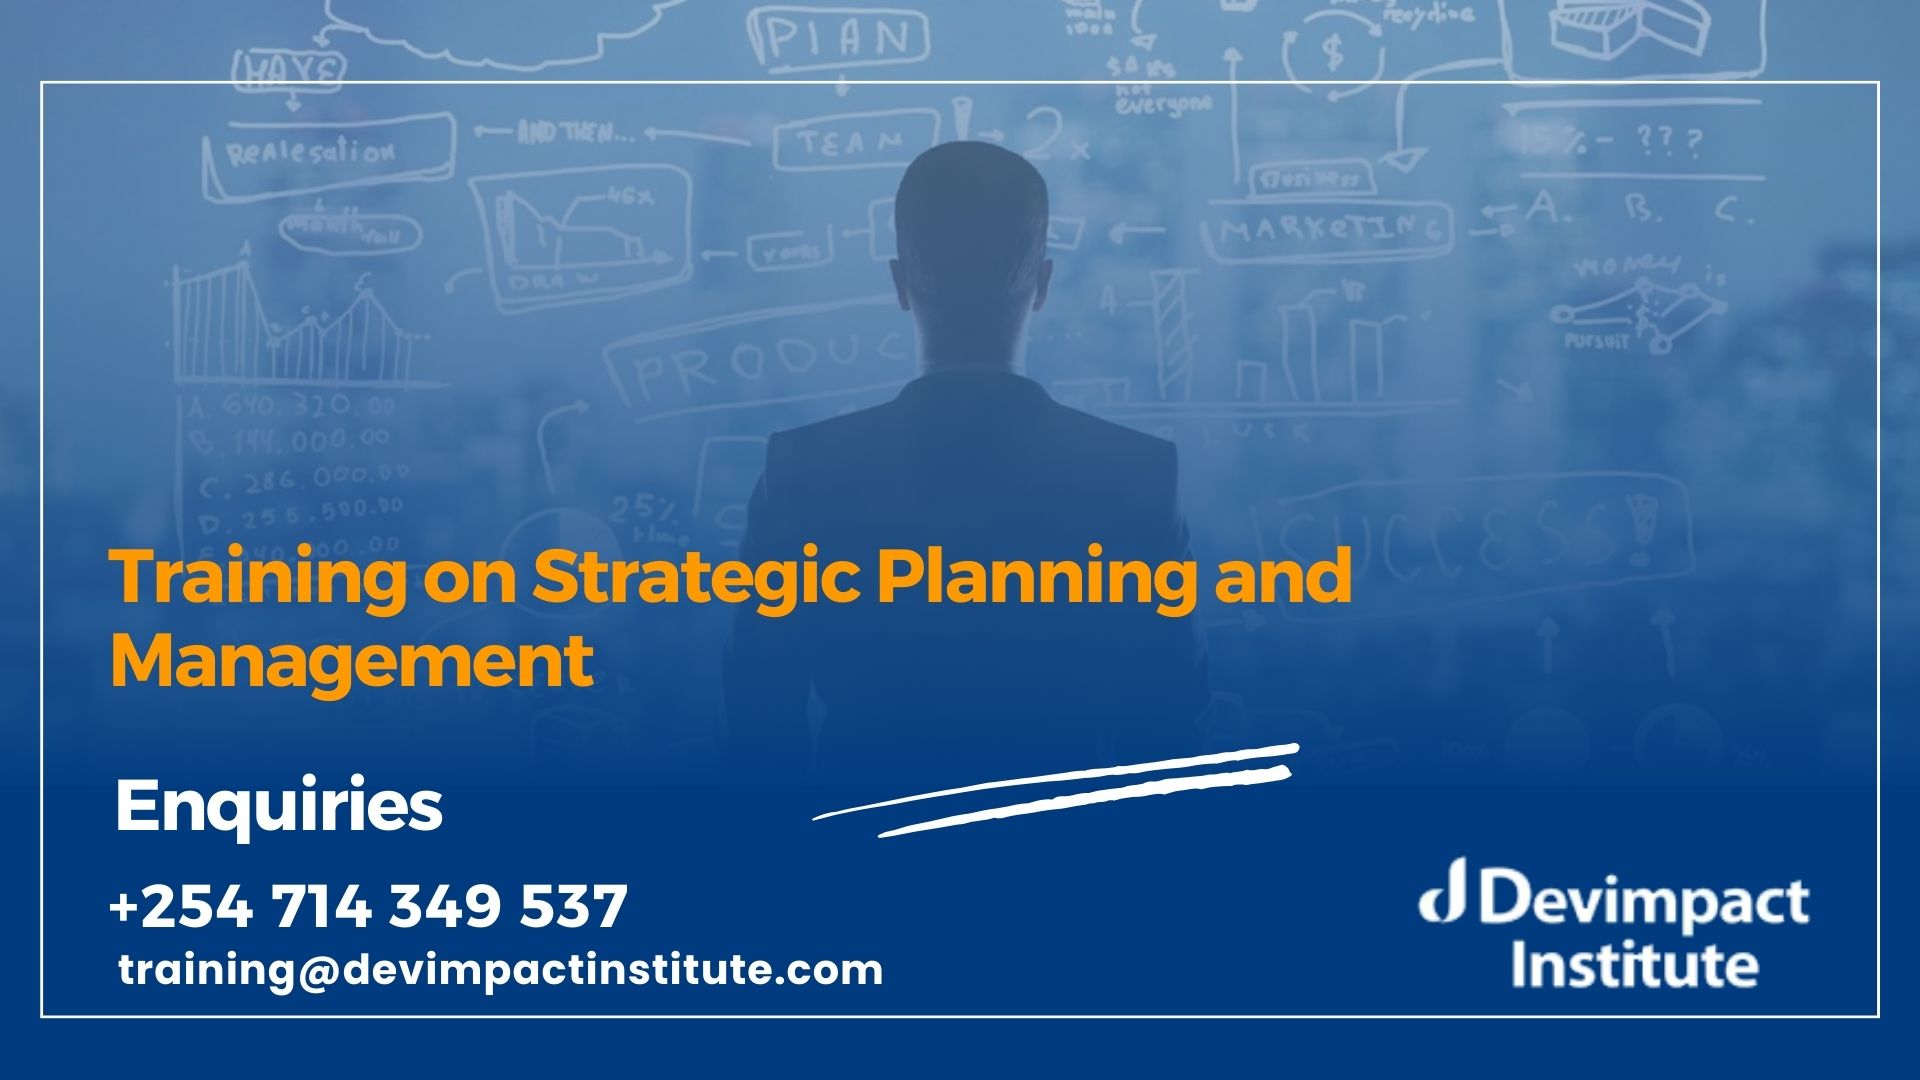 Training on Strategic Planning and Management, Devimpact Institute, Nairobi, Kenya